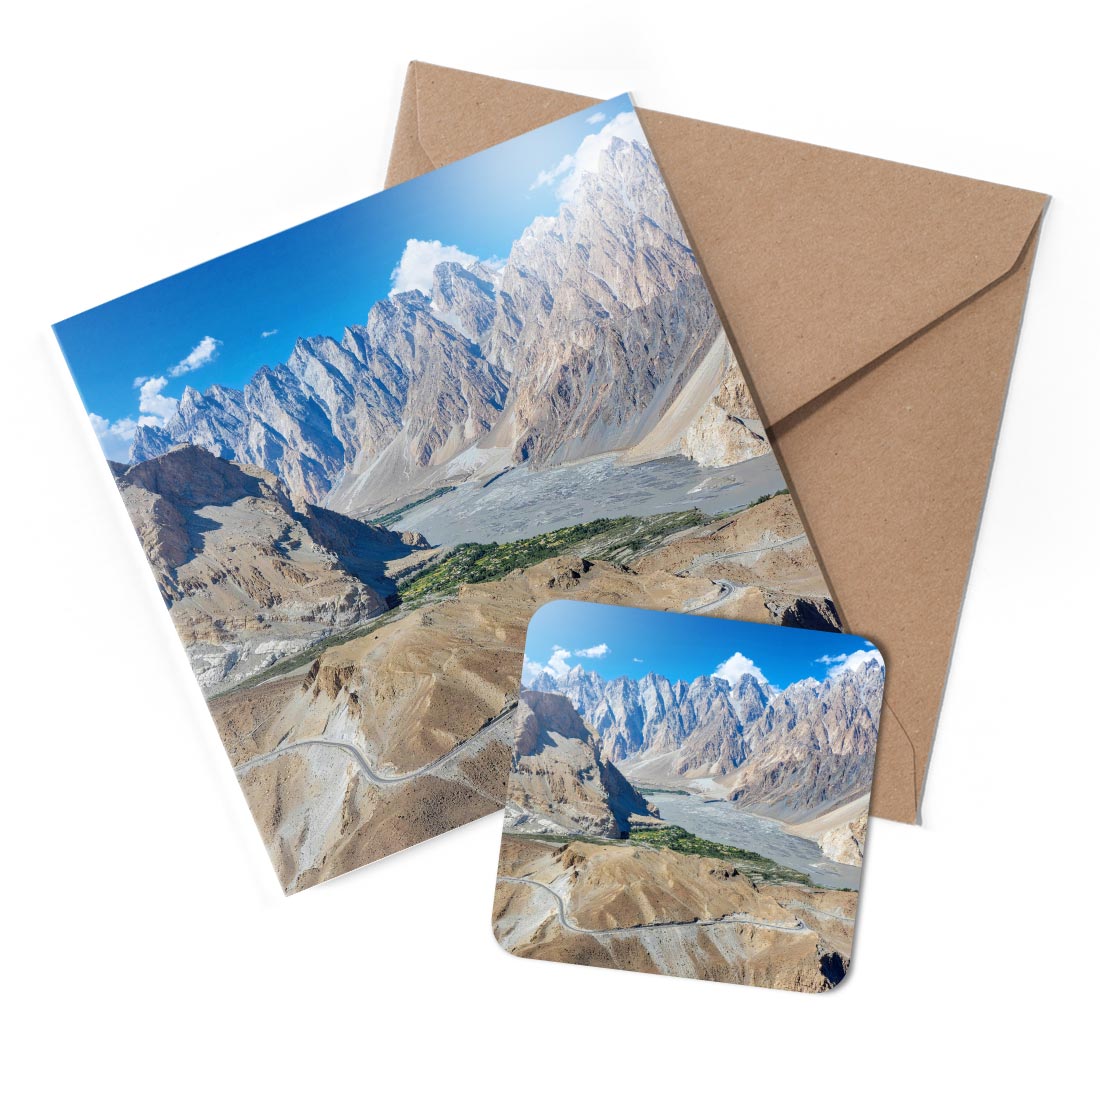 1 x Greeting Card & Coaster Set - Mountains Karakoram Highway Pakistan #51525